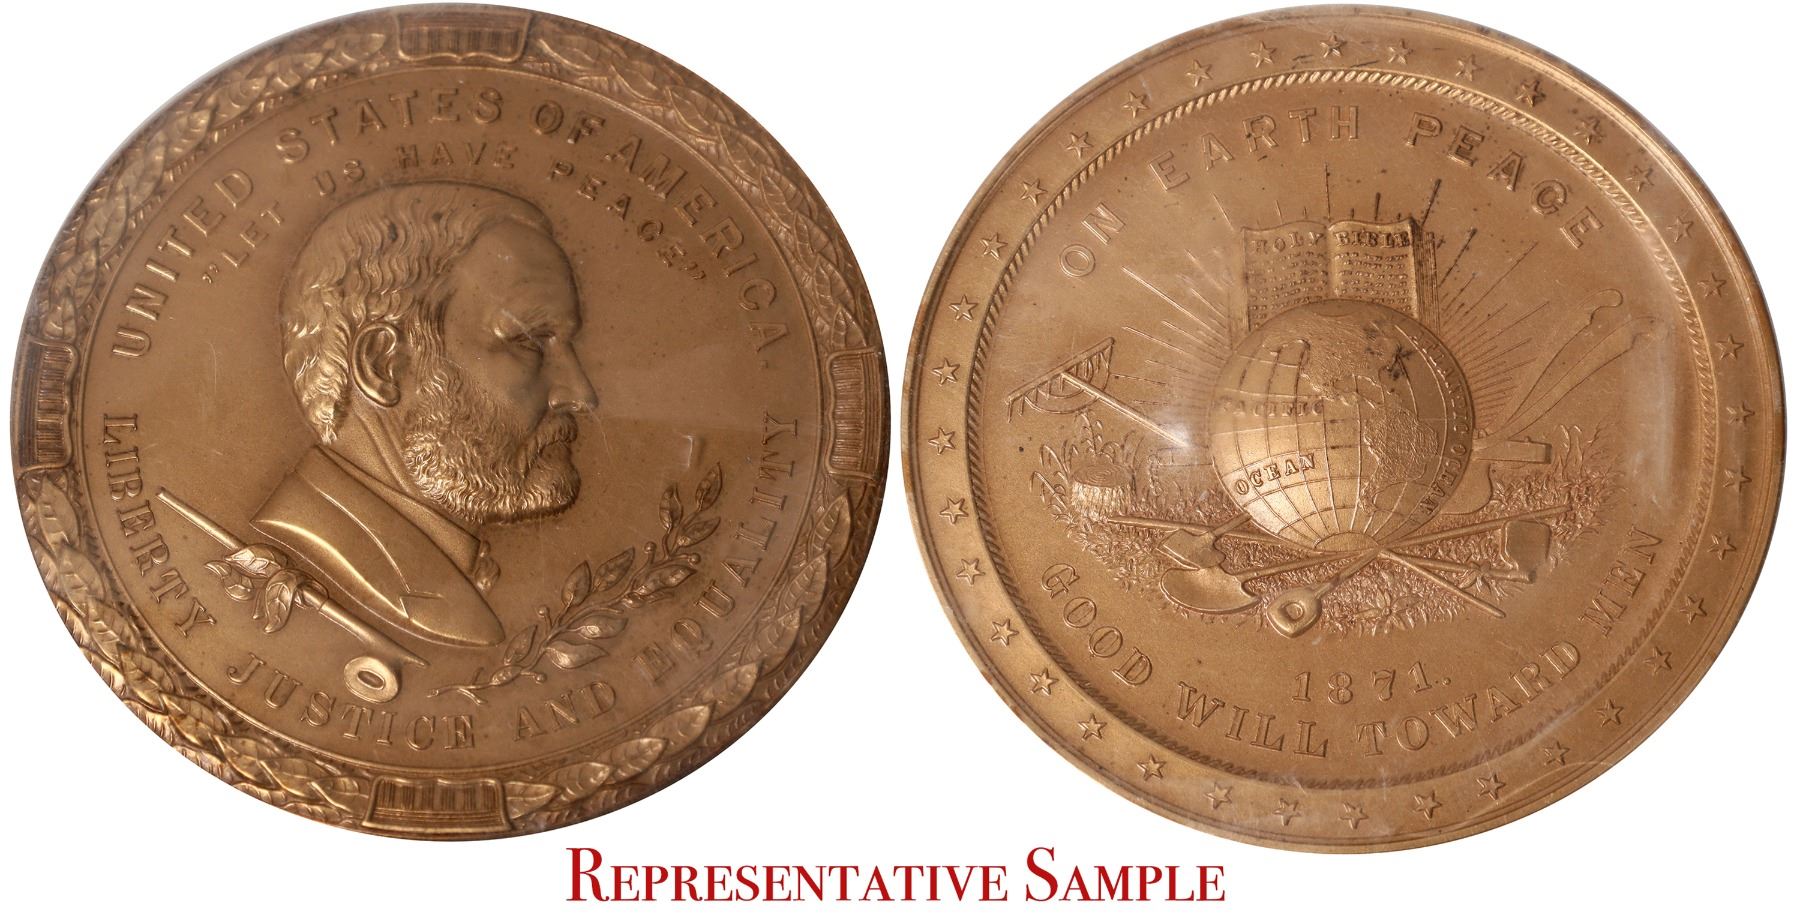 Larry Swick Peace Medal collection, est. $10,000-$30,000